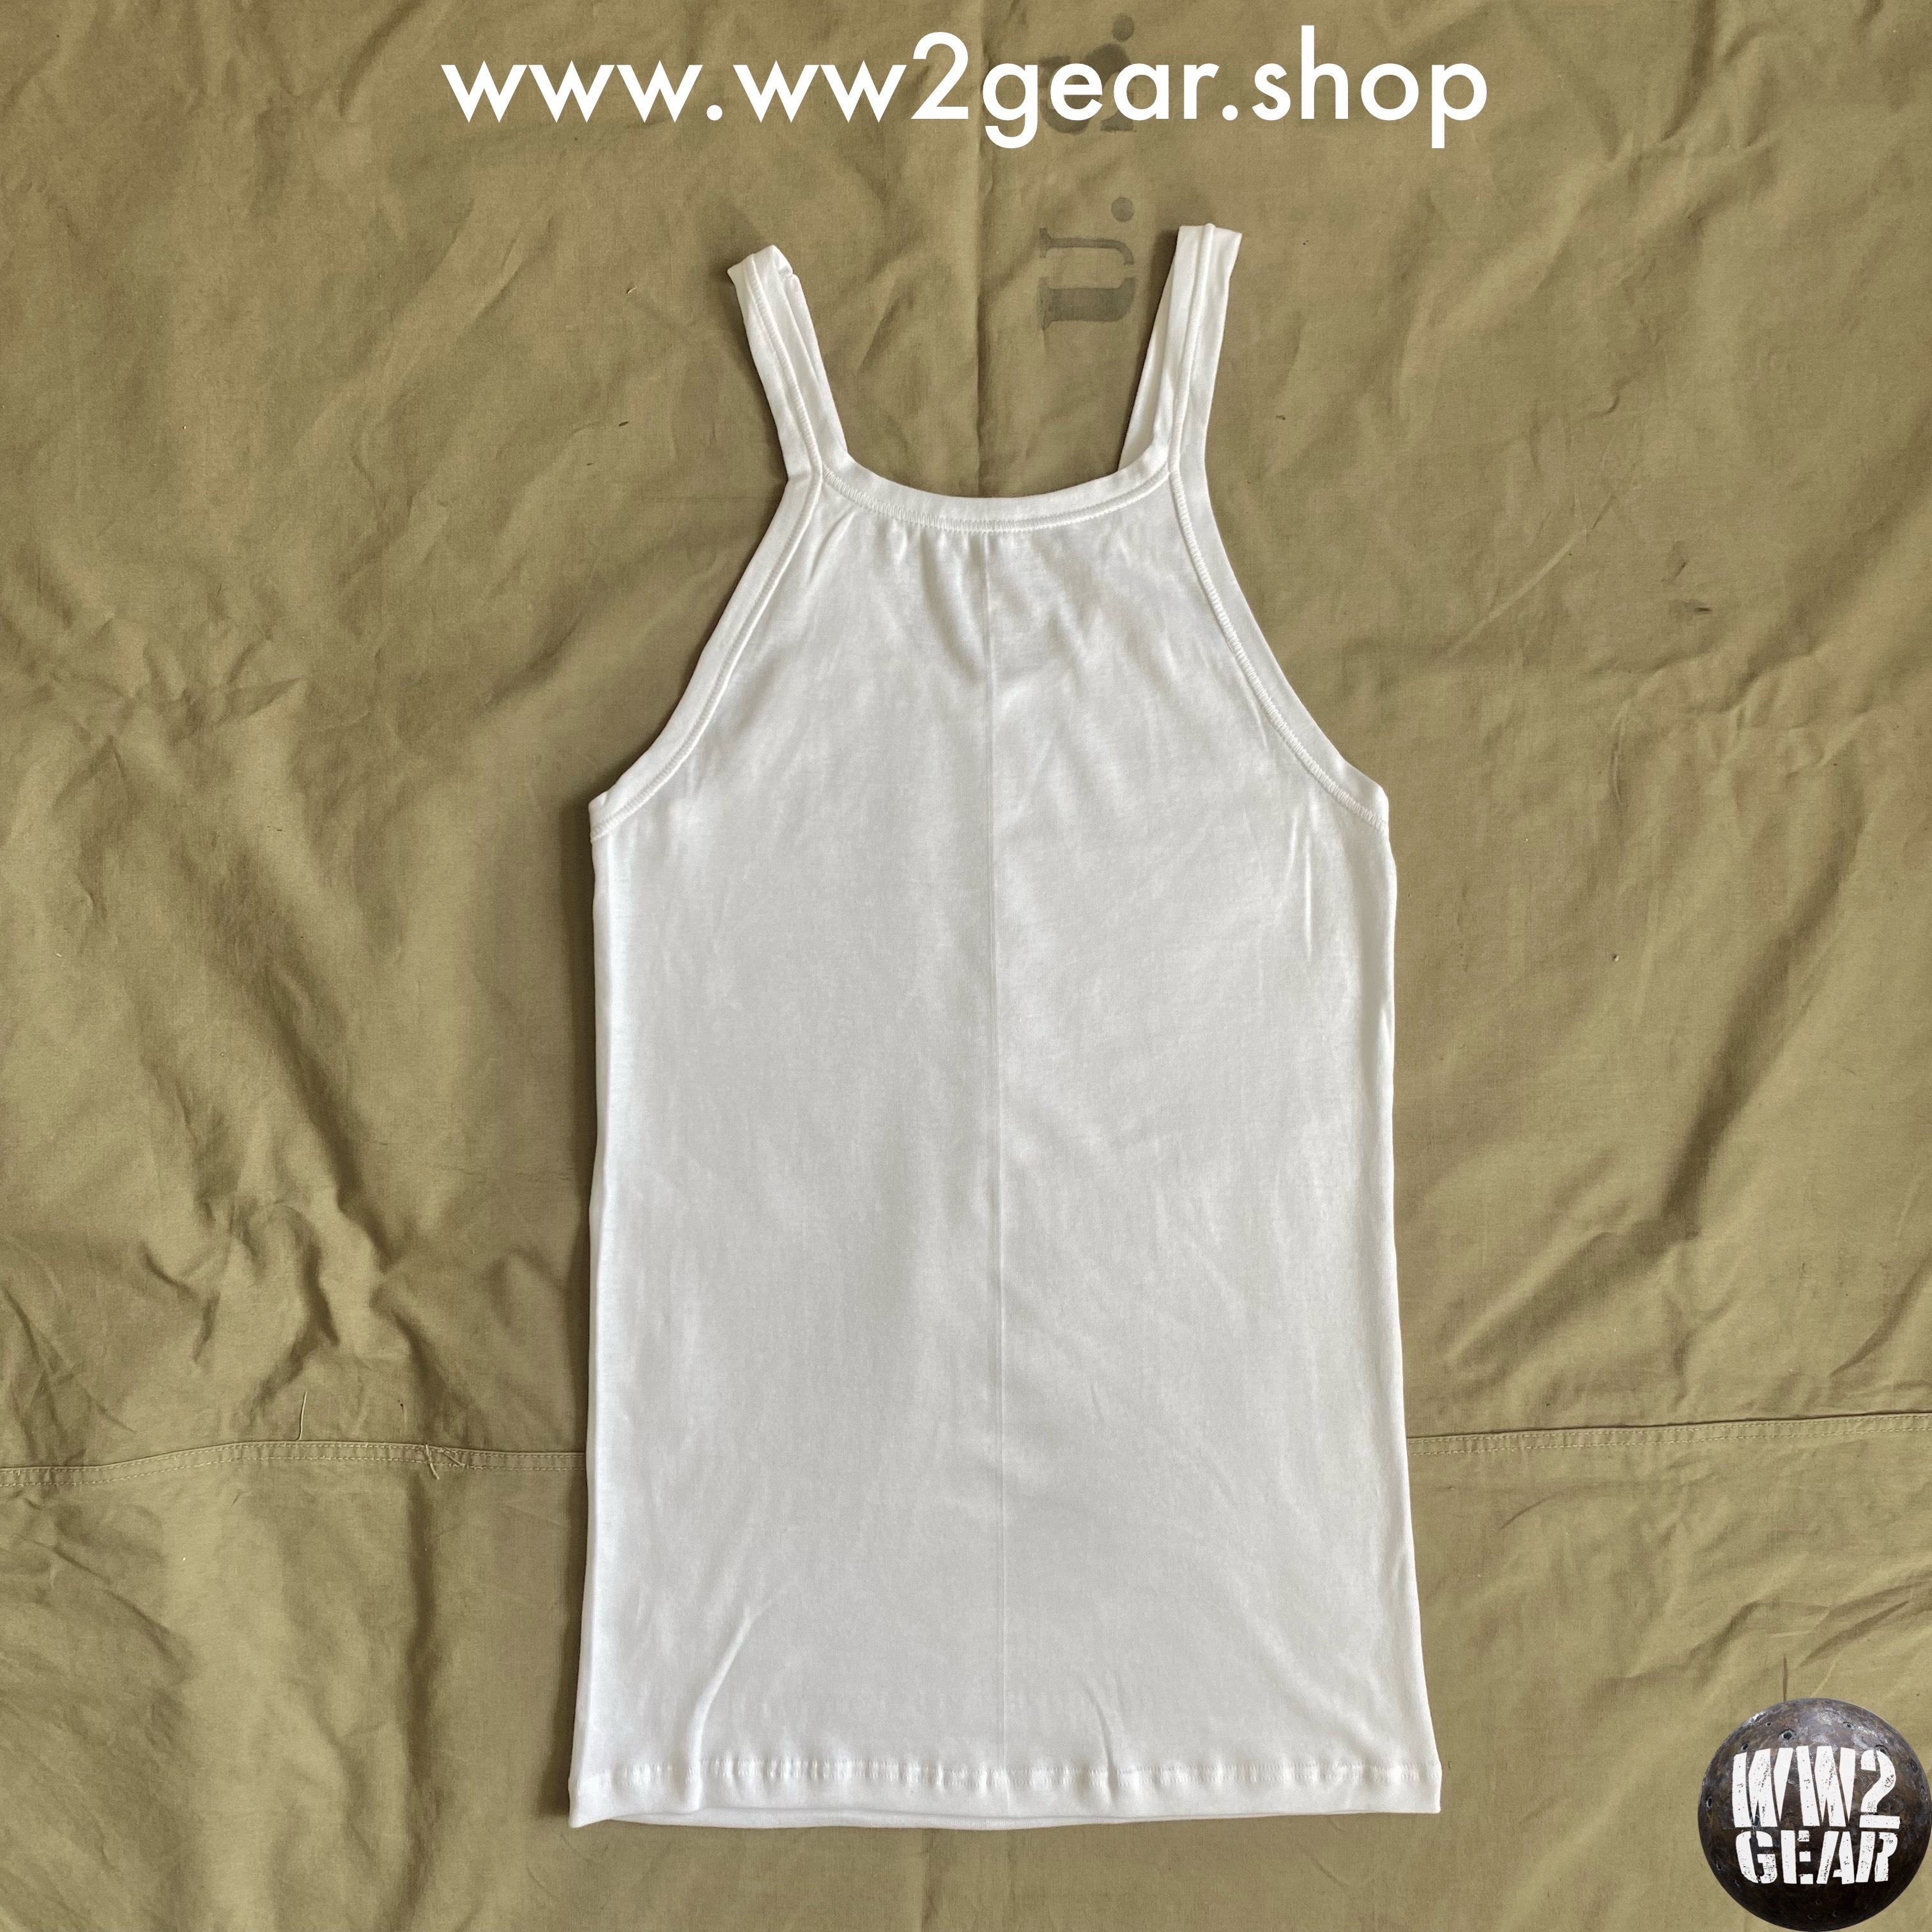 WW2 US Sleeveless Undershirt Tank Top - White (Reproduction)